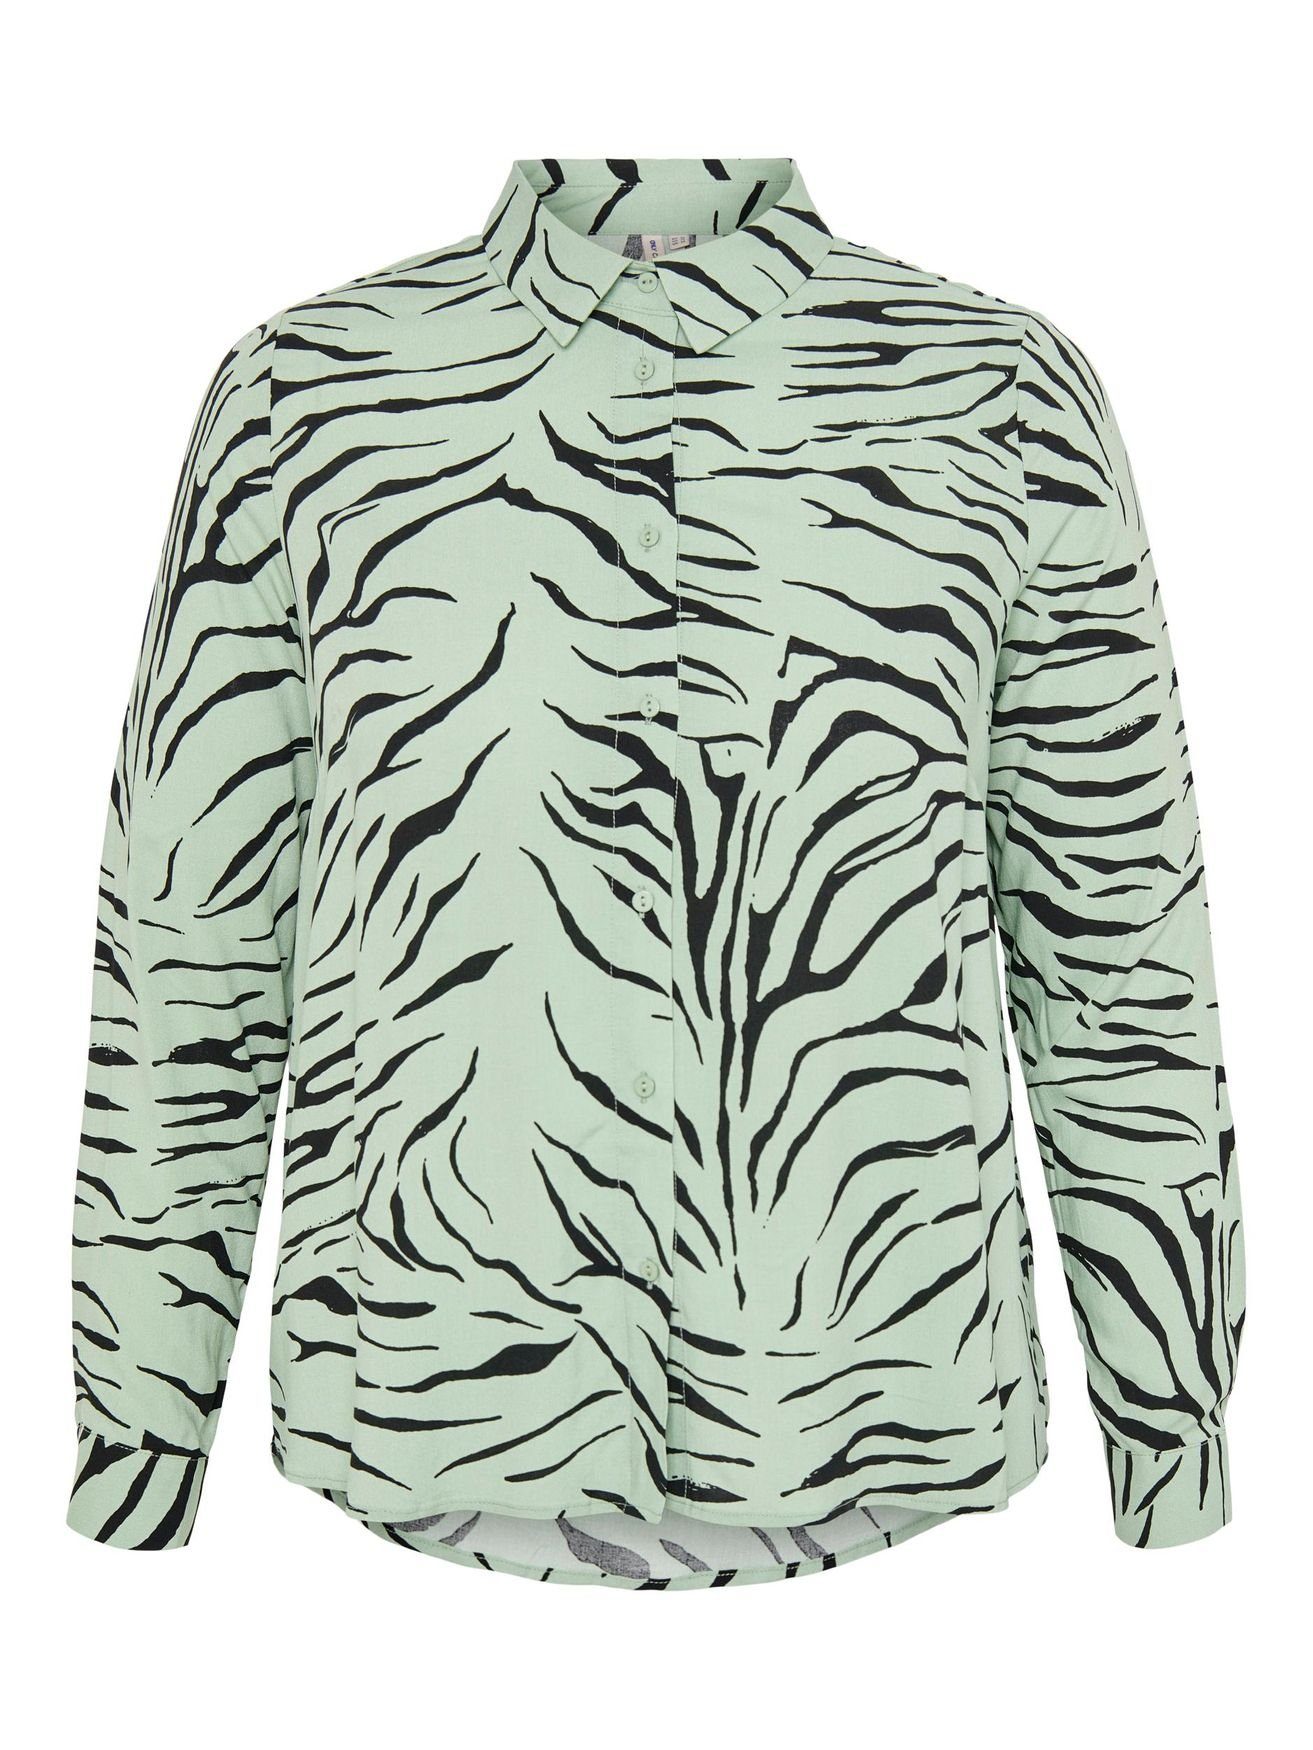 ONLY Hemd Animal Plus Bluse Übergrößen in Blusenshirt CARMAKOMA 4804 Zebra CARNOVA Size Grün Shirt